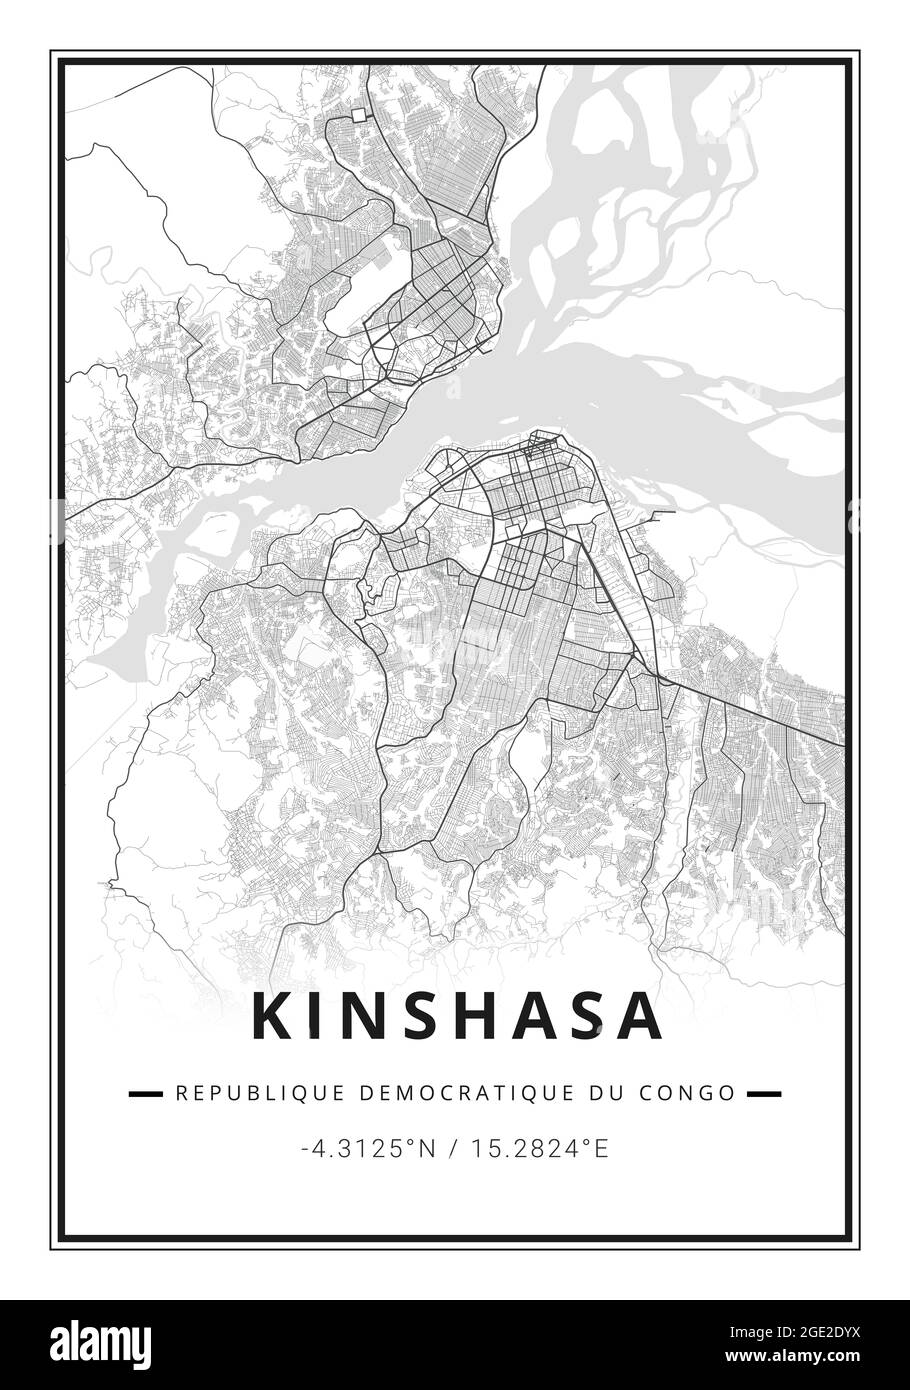 Street map art of Kinshasa city in Congo RDC - Africa Stock Photo